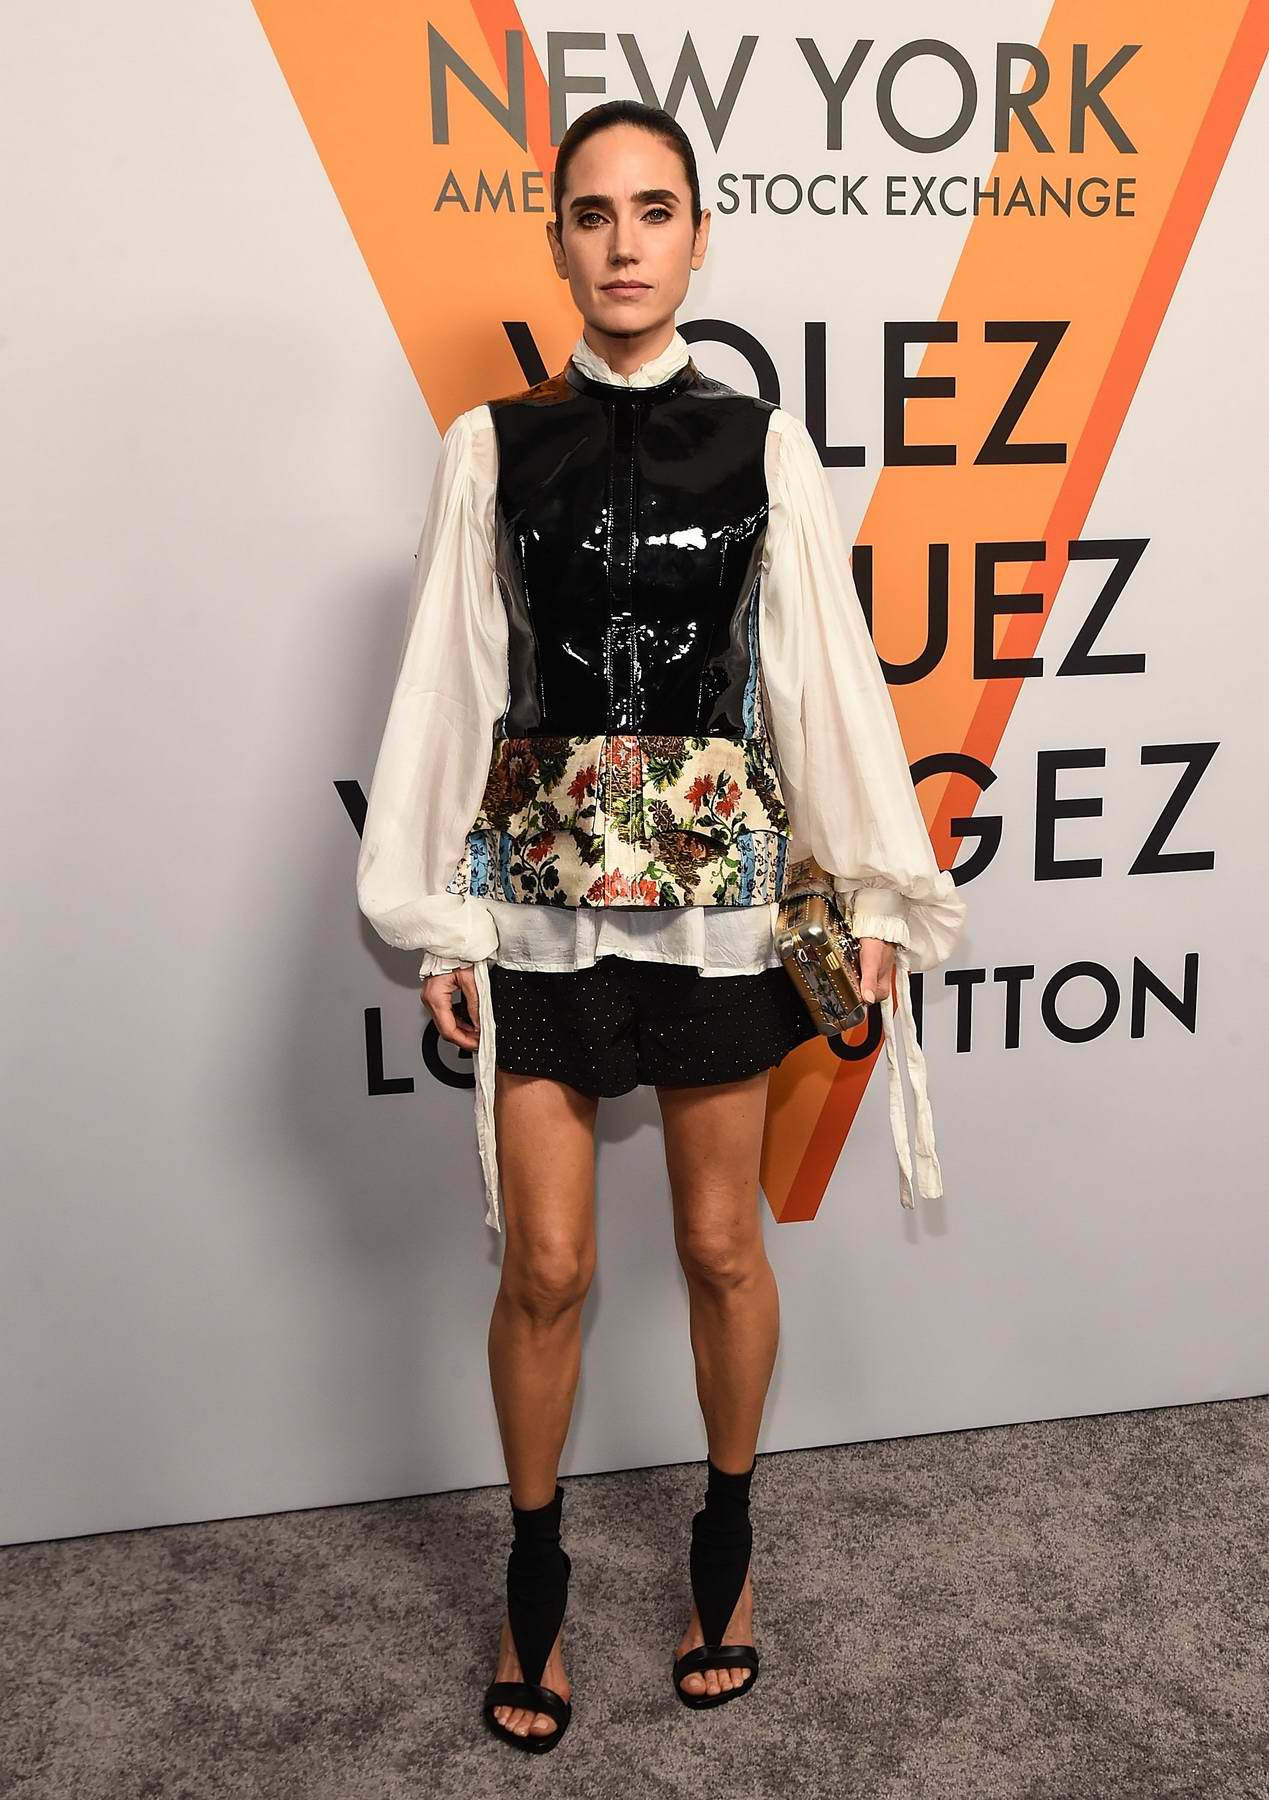 Jennifer Connelly At Launch Party For Louis Vuitton Exhibit